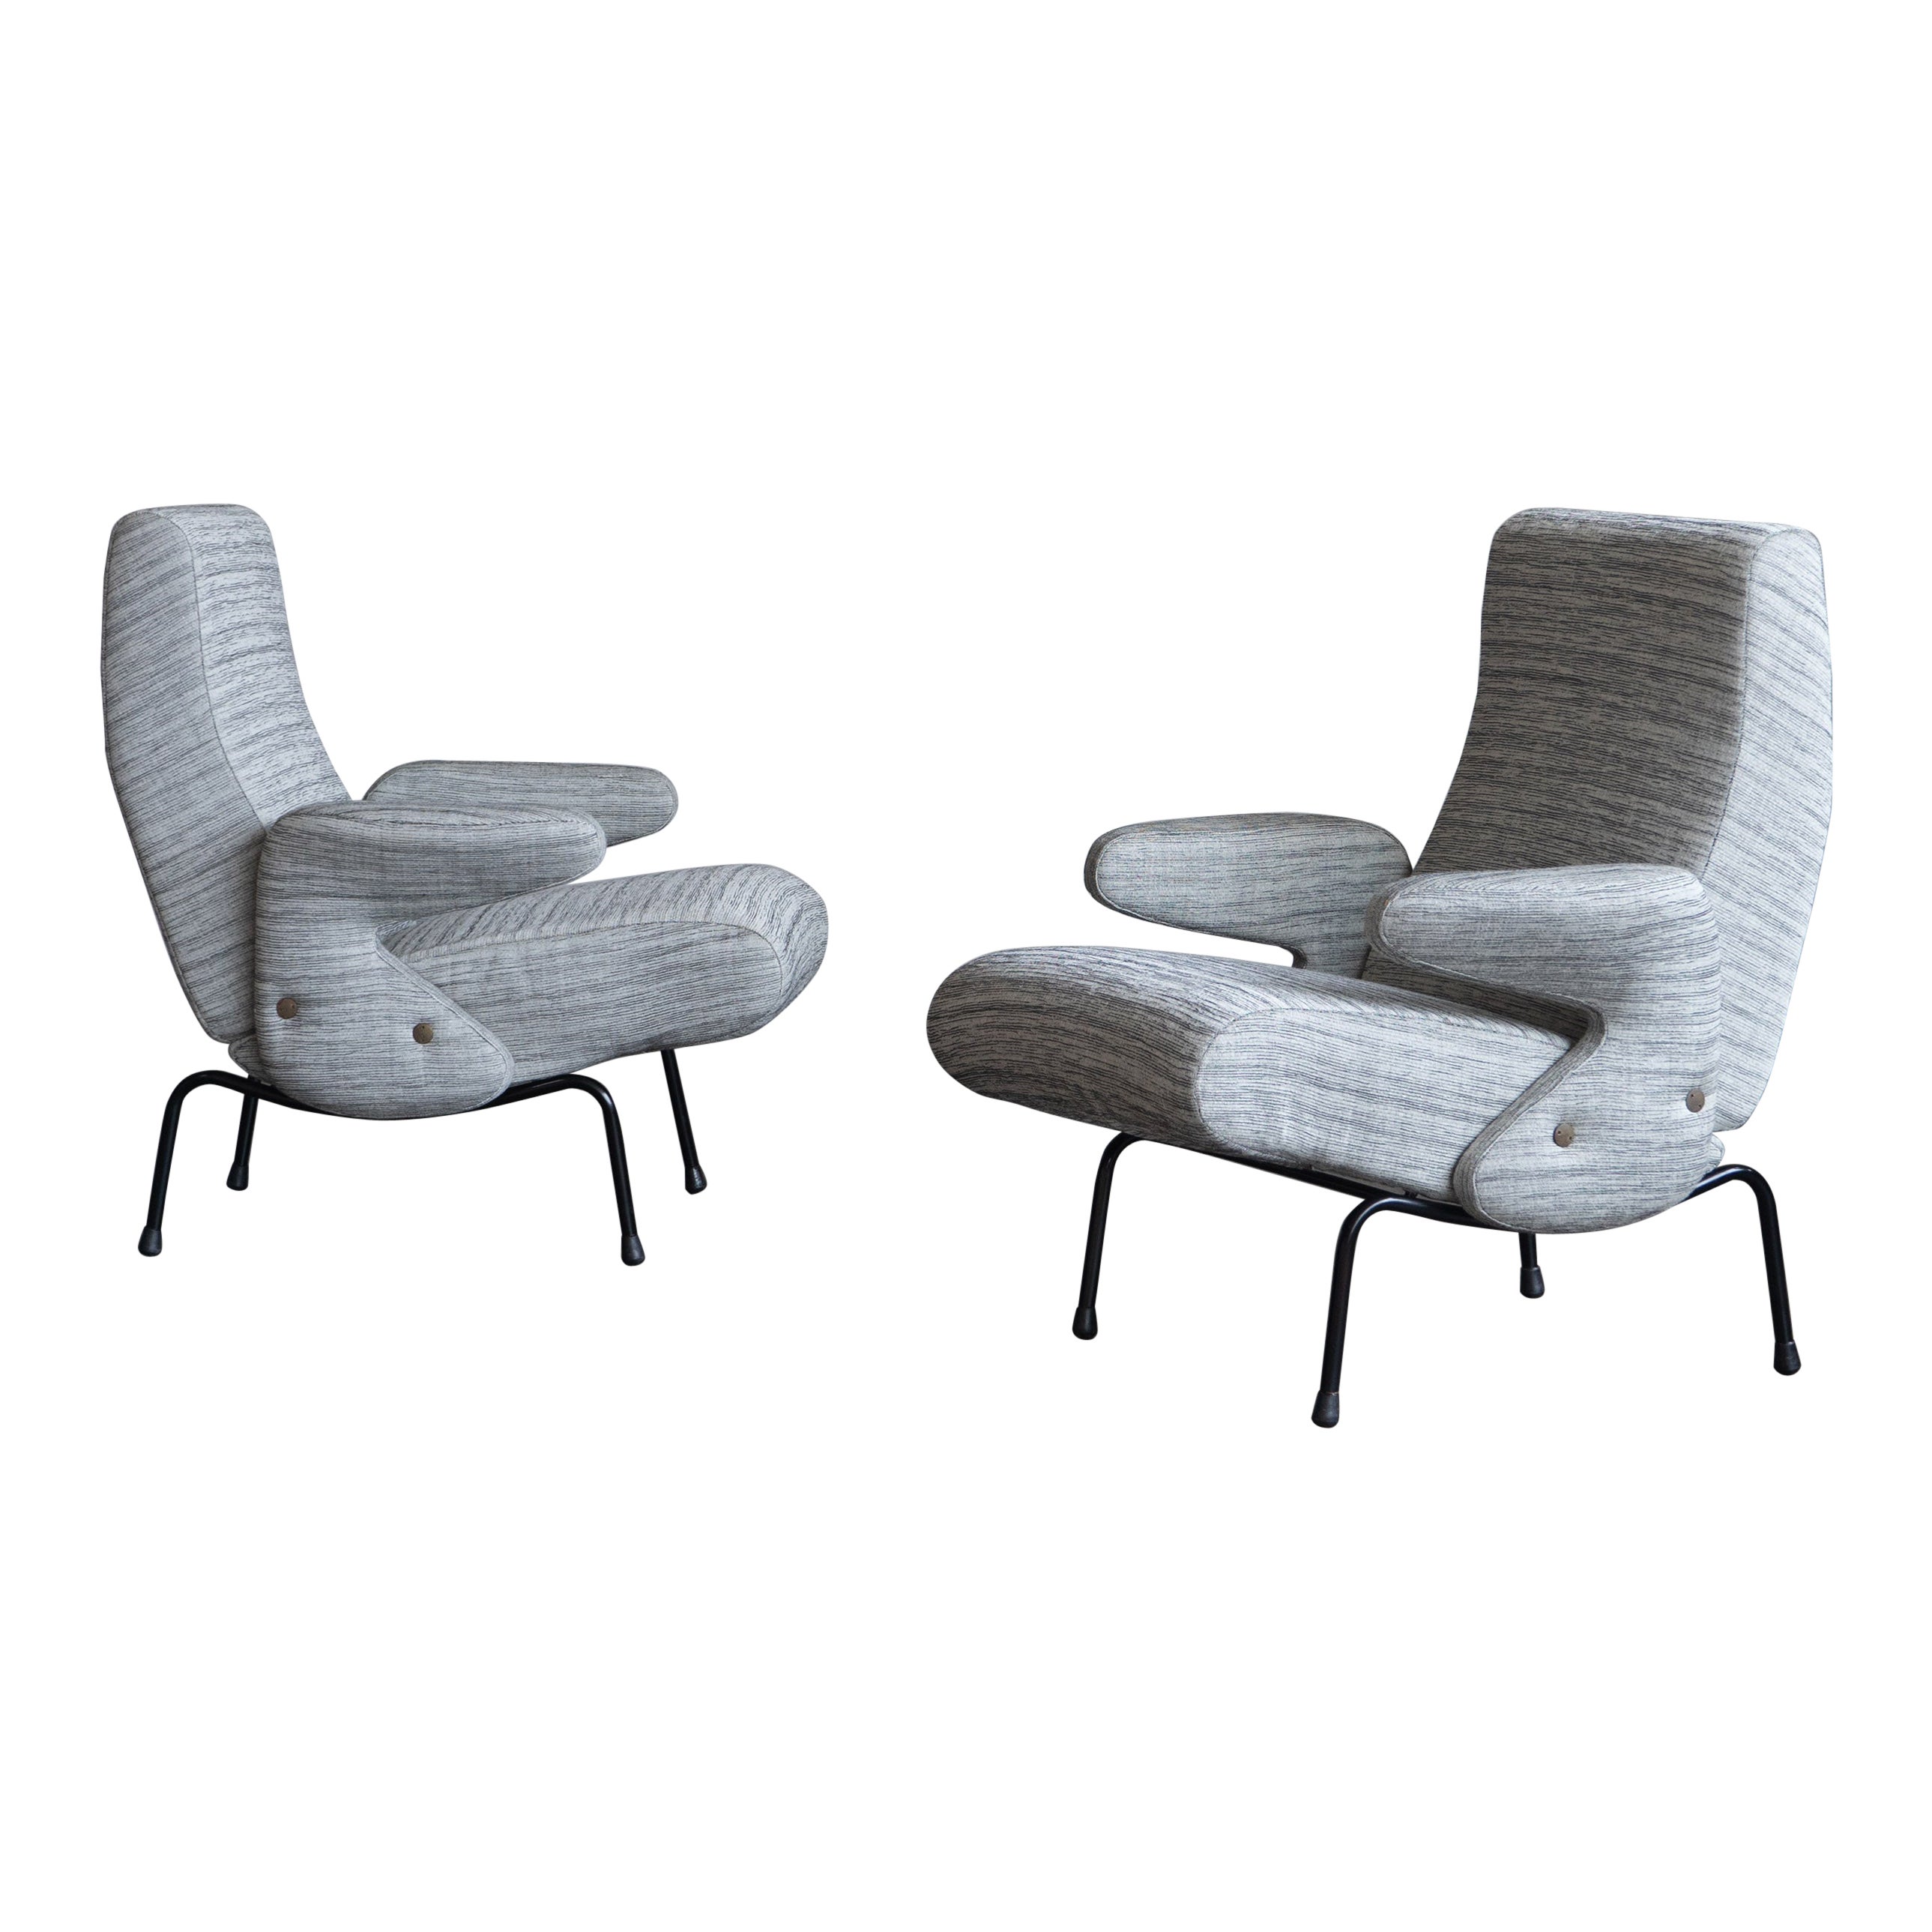 Set of Two Club Chairs "Delfino" by Erberto Carboni for Arflex, 1950s